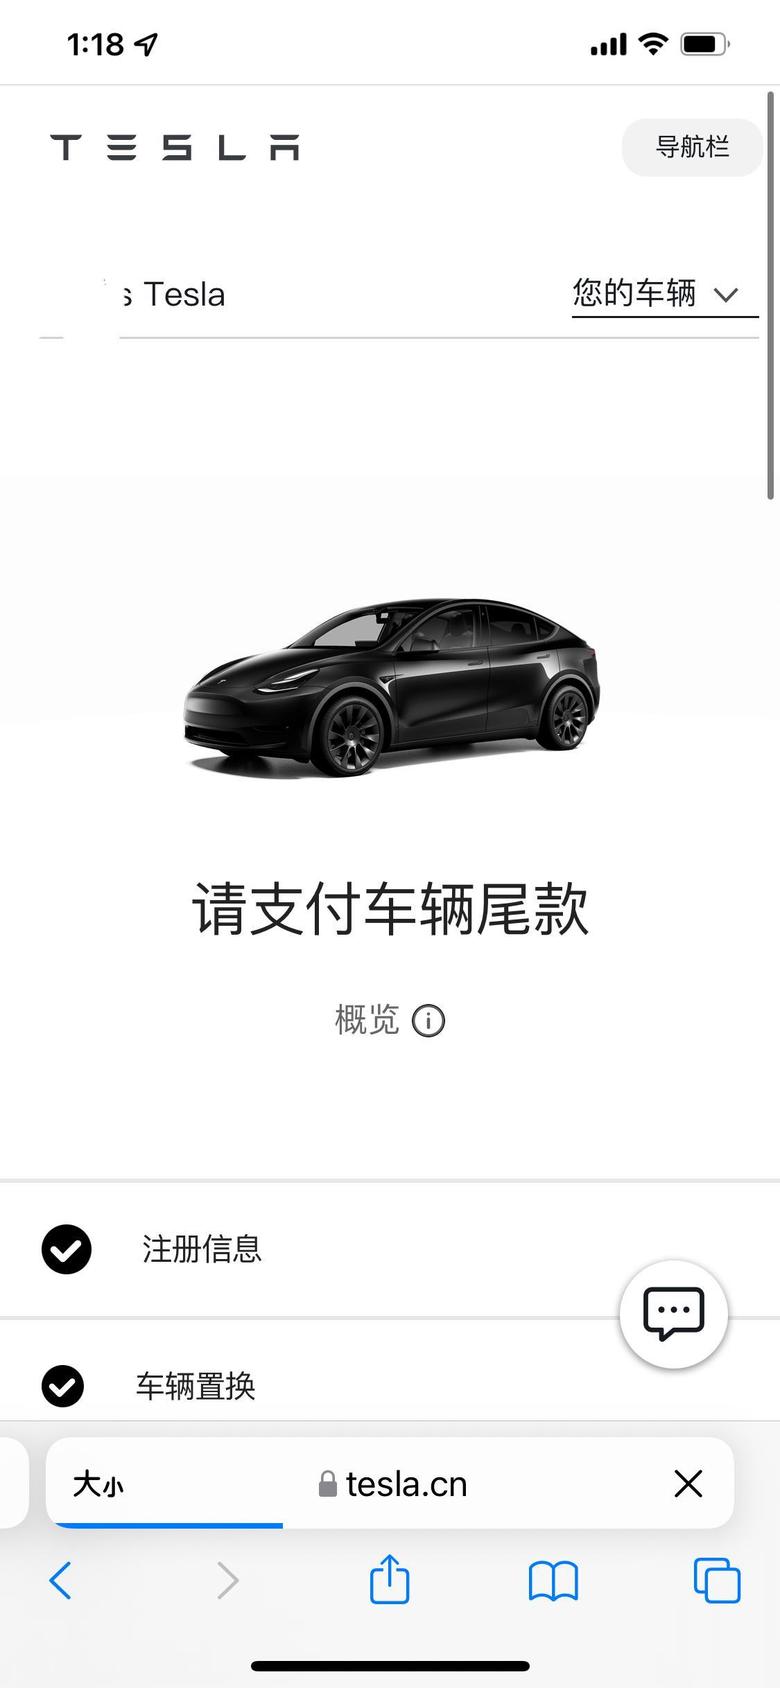 model y 深圳黑20191订单已变态，车下周一到深圳，下周二提车，供大家参考。